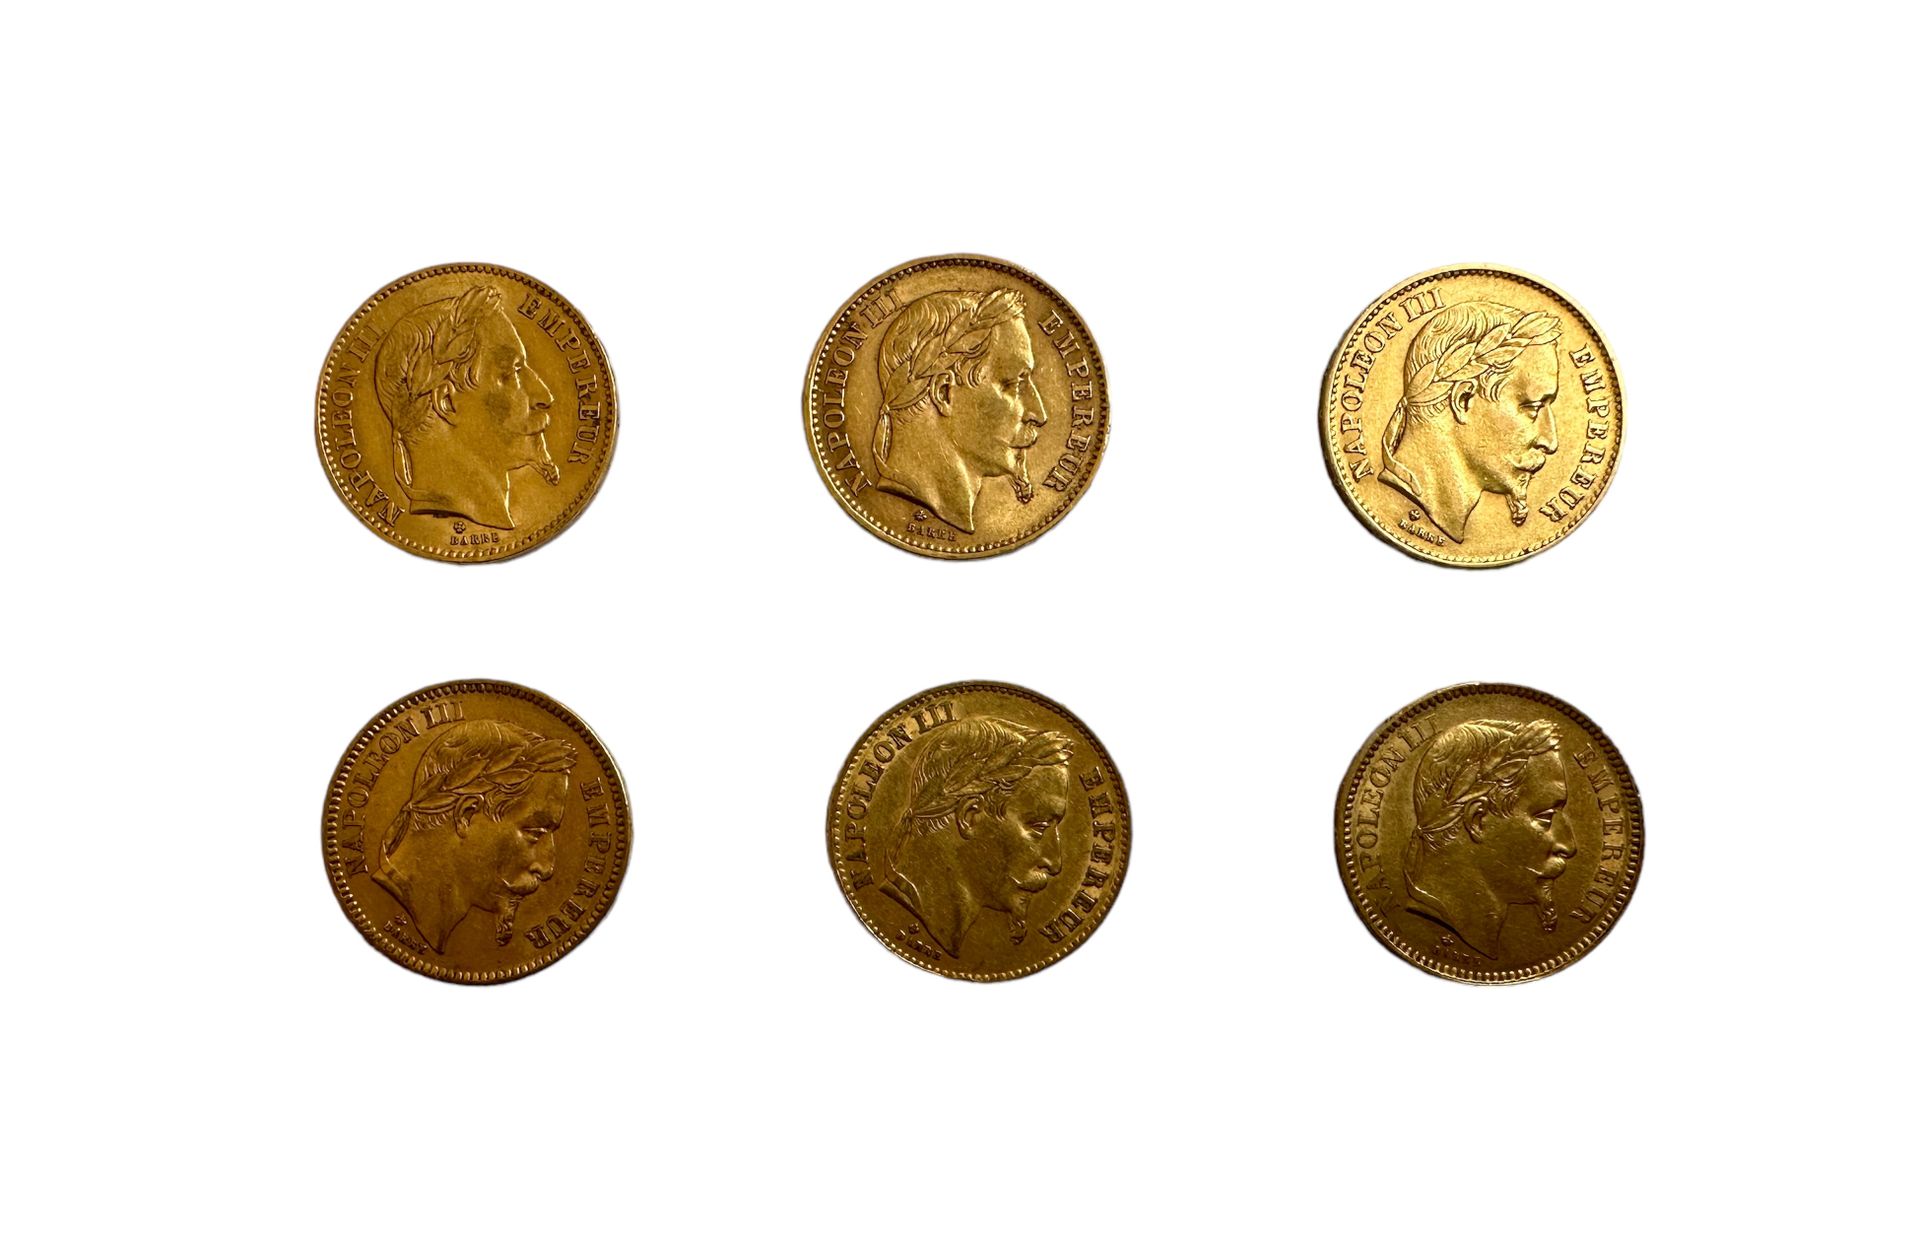 Null FRANCIA
6 monedas de 20 francos de oro Napoleón III cabeza
Peso : 38 g